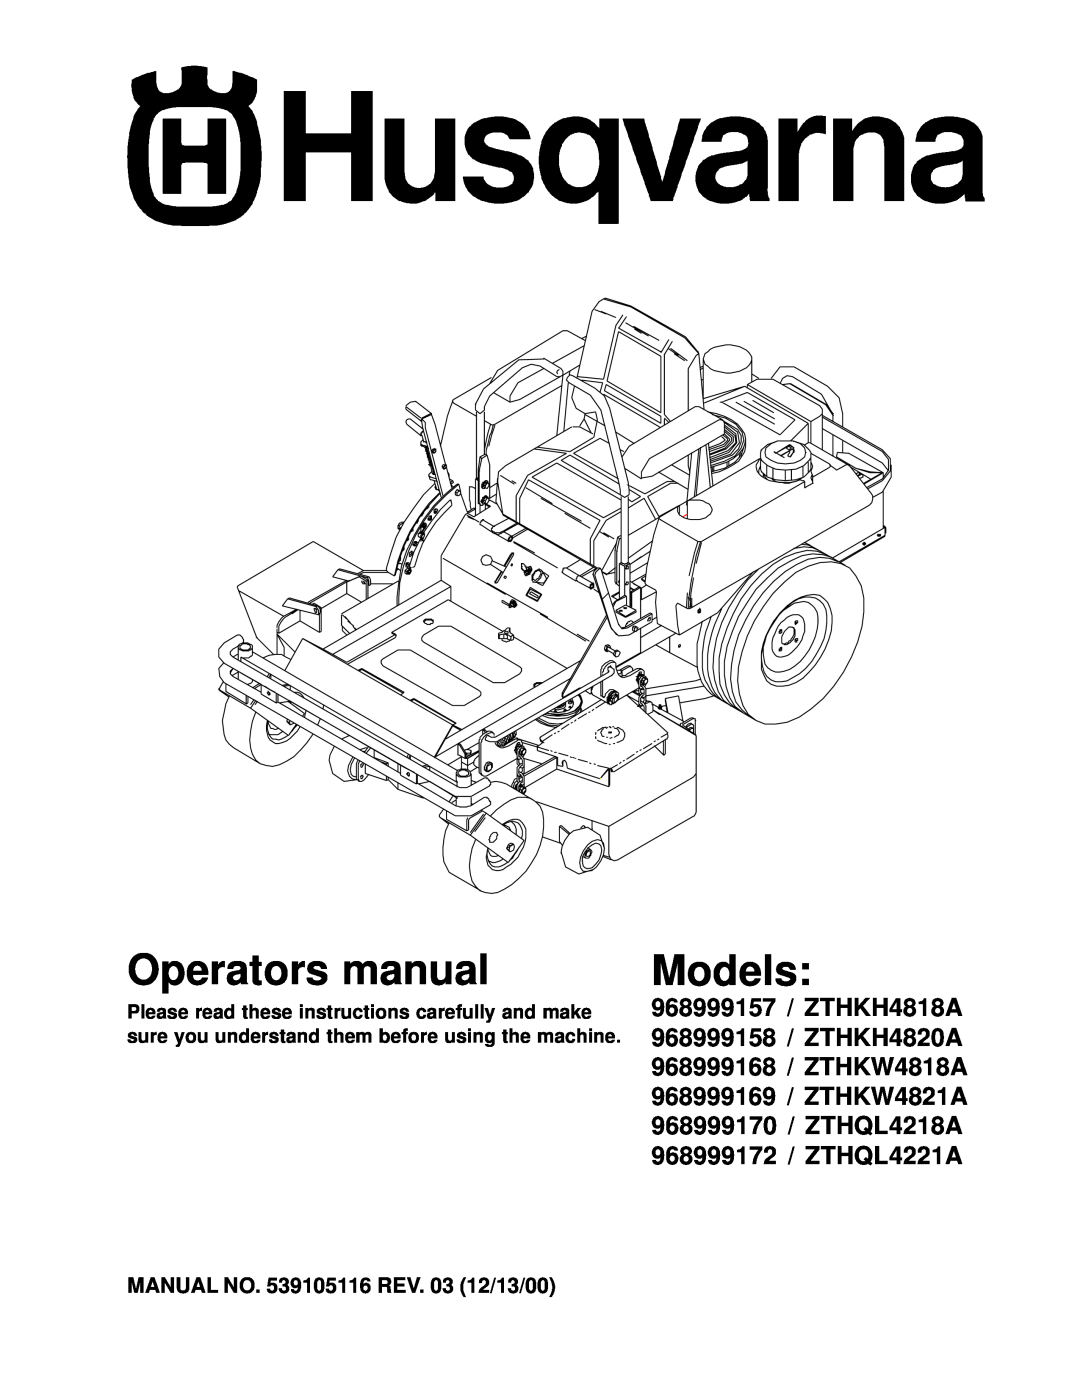 Husqvarna ZTHKW4818A, ZTHKW4821A, ZTHQL4221A manual Operators manual, Models, 968999157 / ZTHKH4818A 968999158 / ZTHKH4820A 